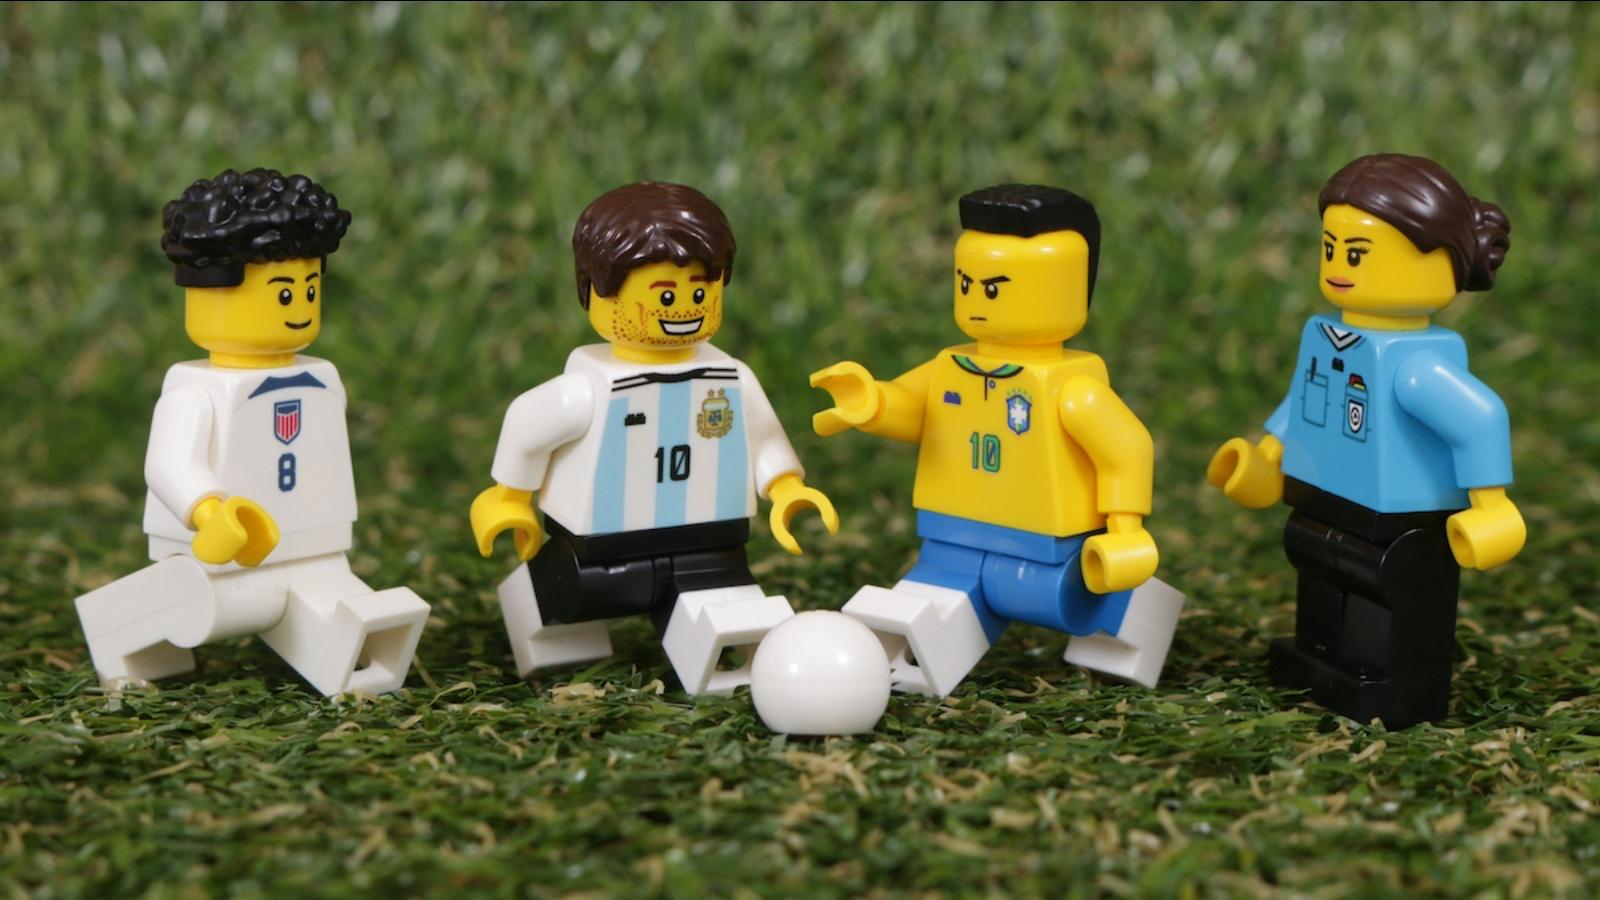 https://www.dexerto.com/cdn-cgi/image/width=3840,quality=75,format=auto/https://editors.dexerto.com/wp-content/uploads/2023/06/14/lego-football-minifigs.jpg